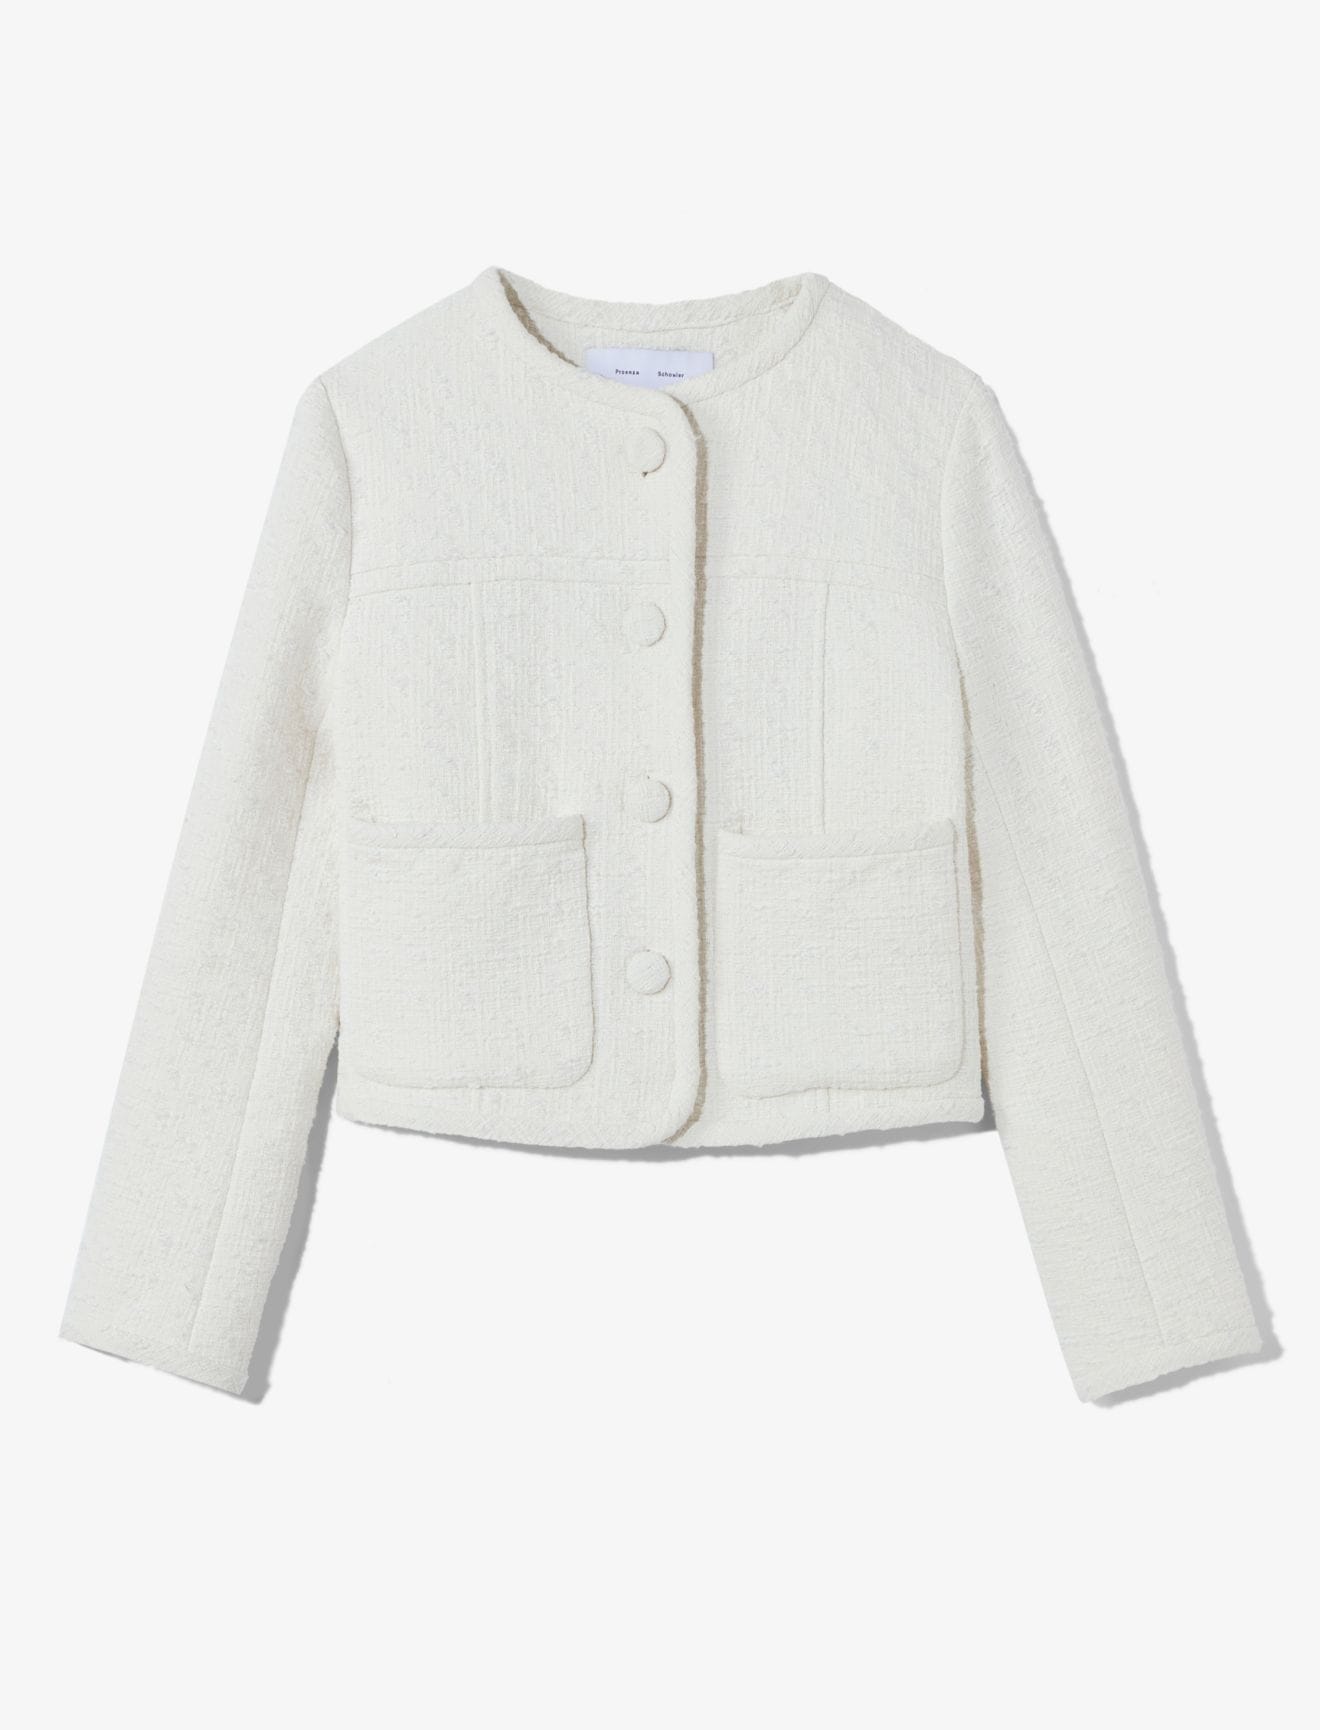 Tweed Cropped Jacket in white | Proenza Schouler